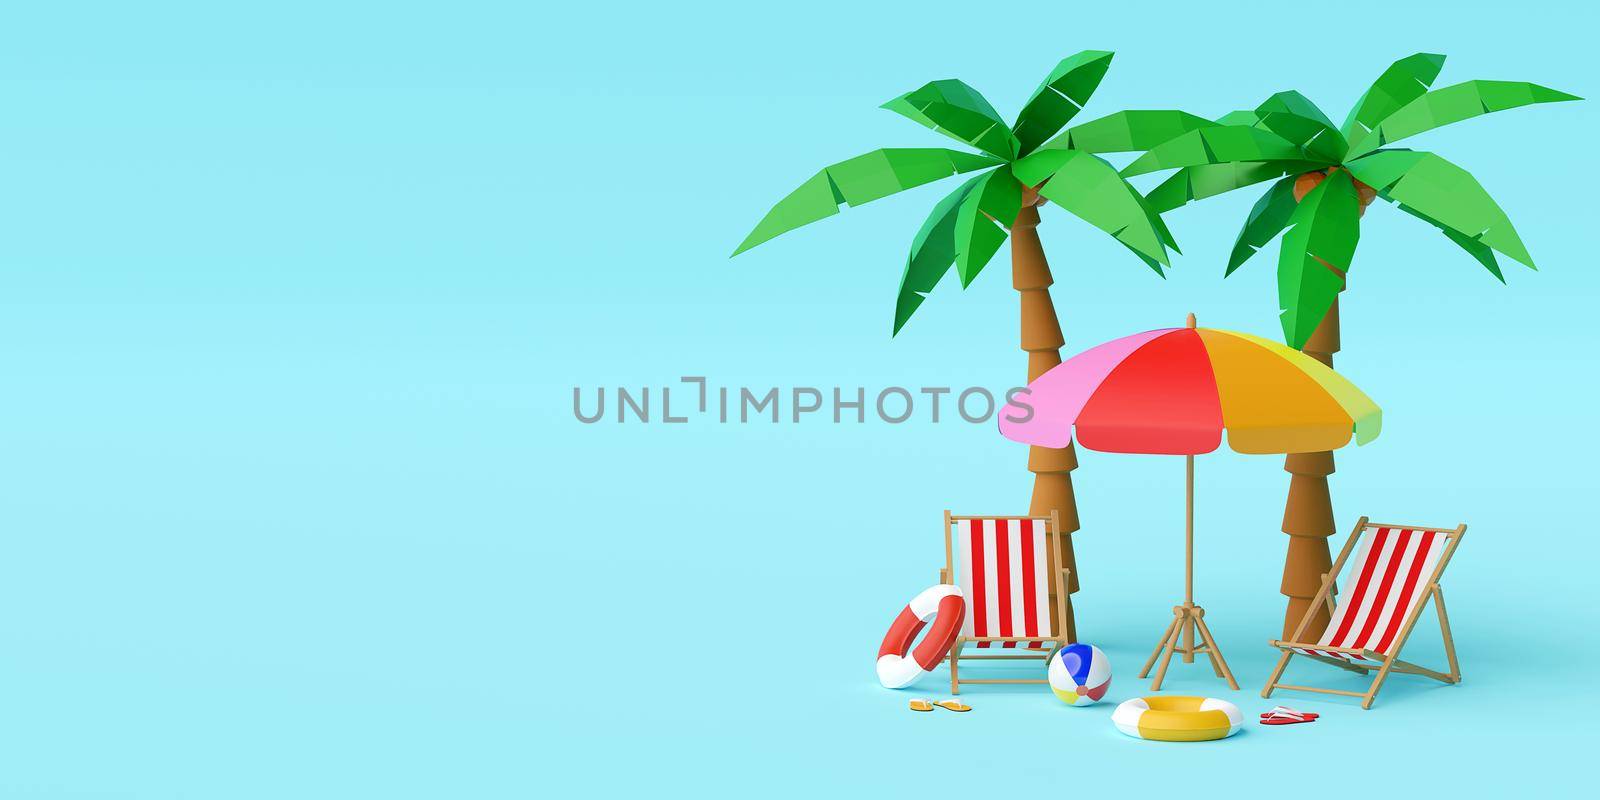 Summer vacation concept, Beach umbrella, chairs and accessories under palm tree on blue background, 3d illustration by nutzchotwarut